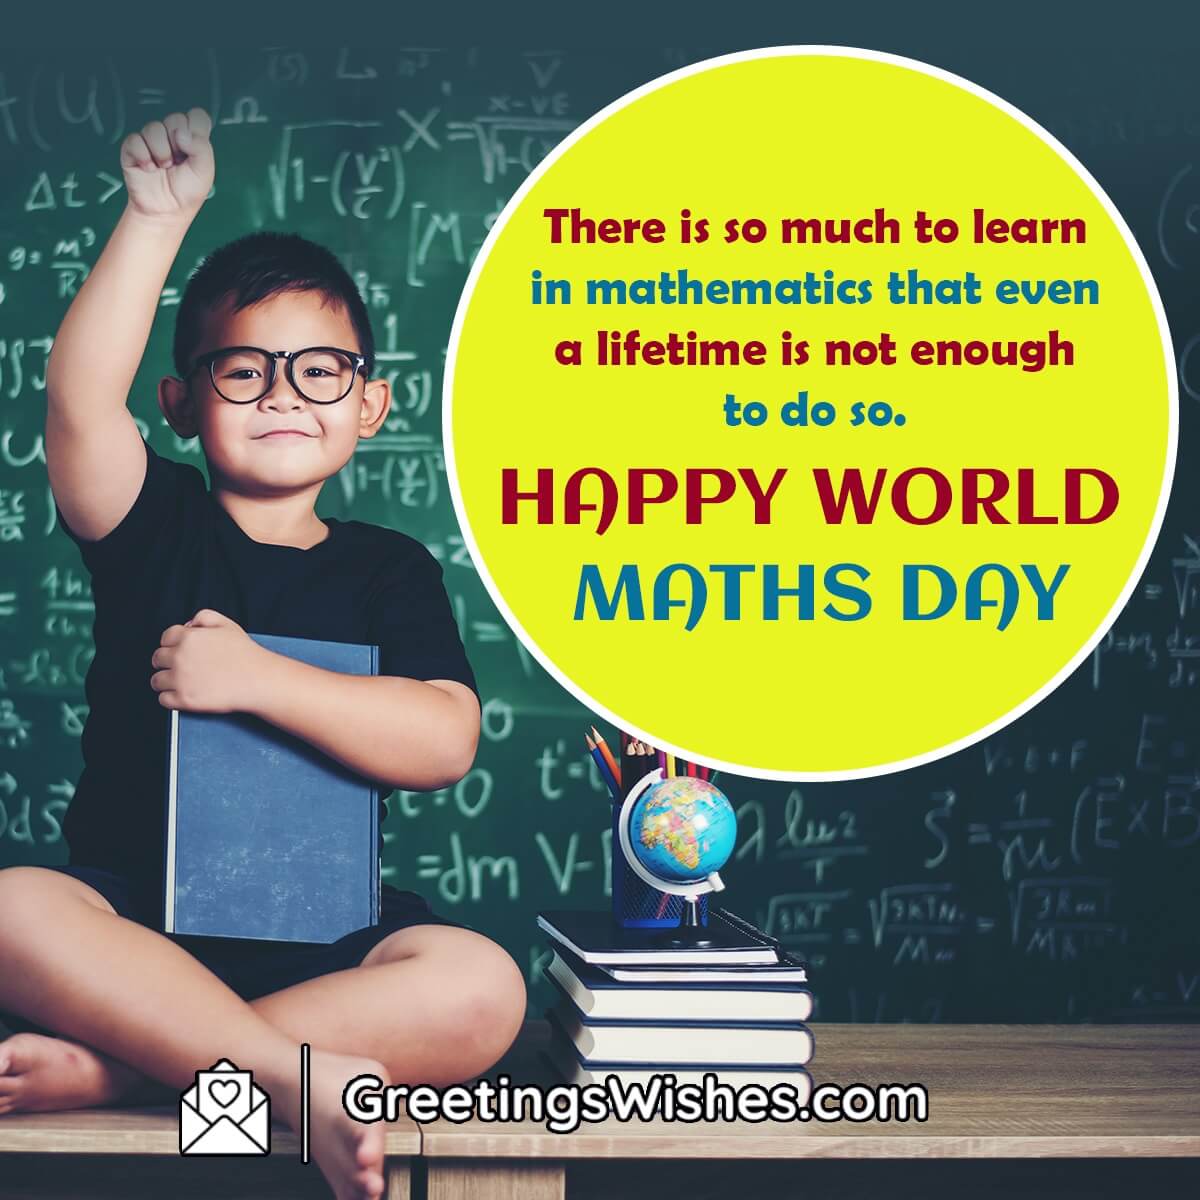 Happy World Maths Day